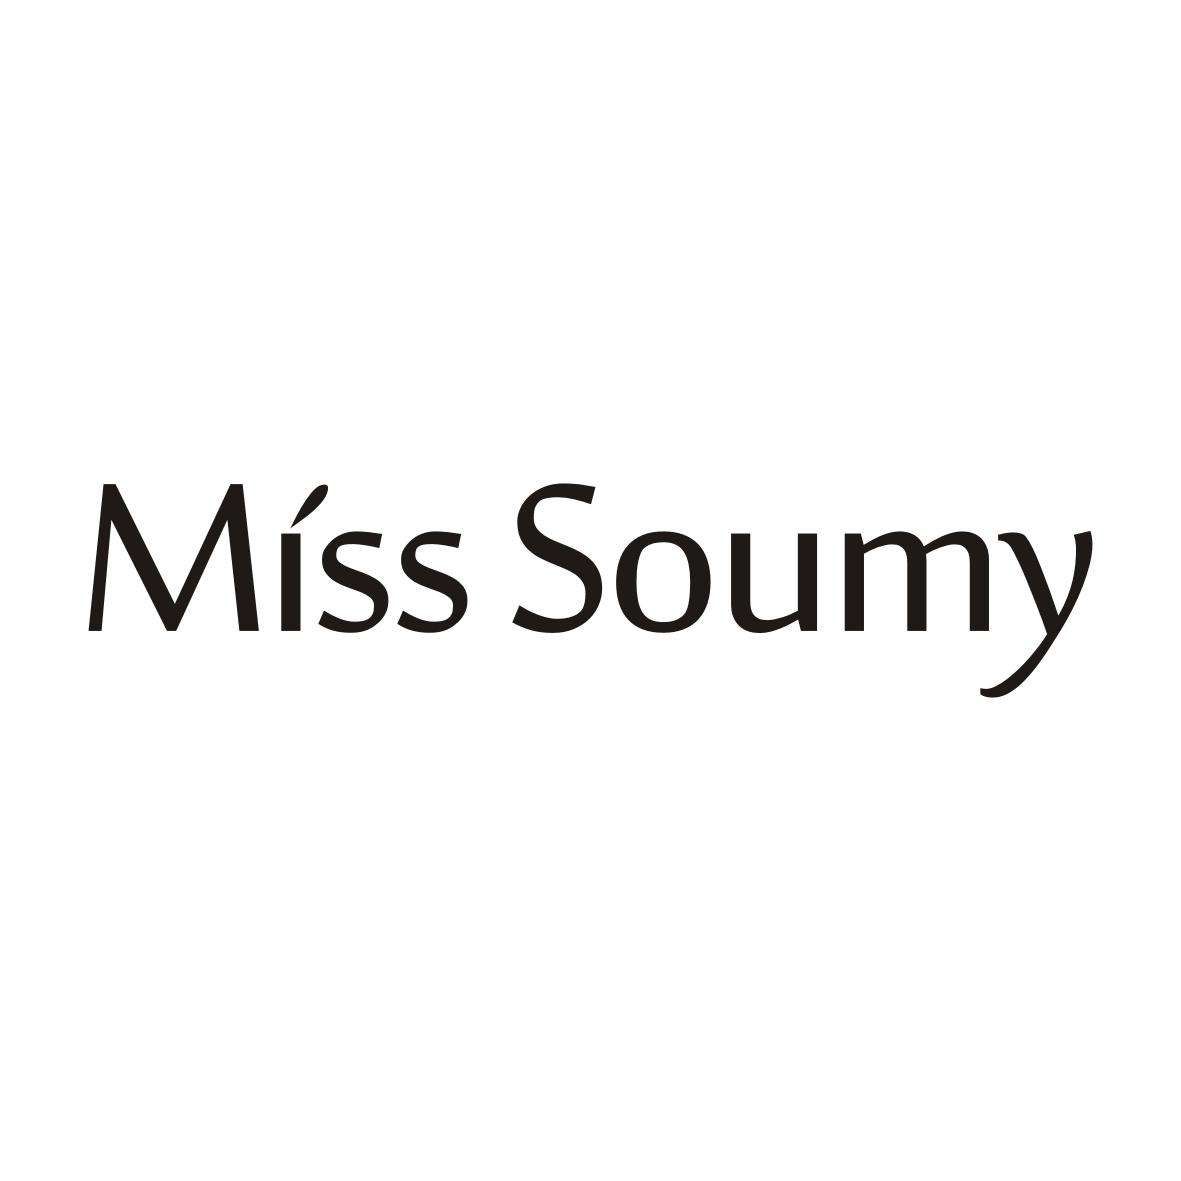 MISS SOUMY商标转让